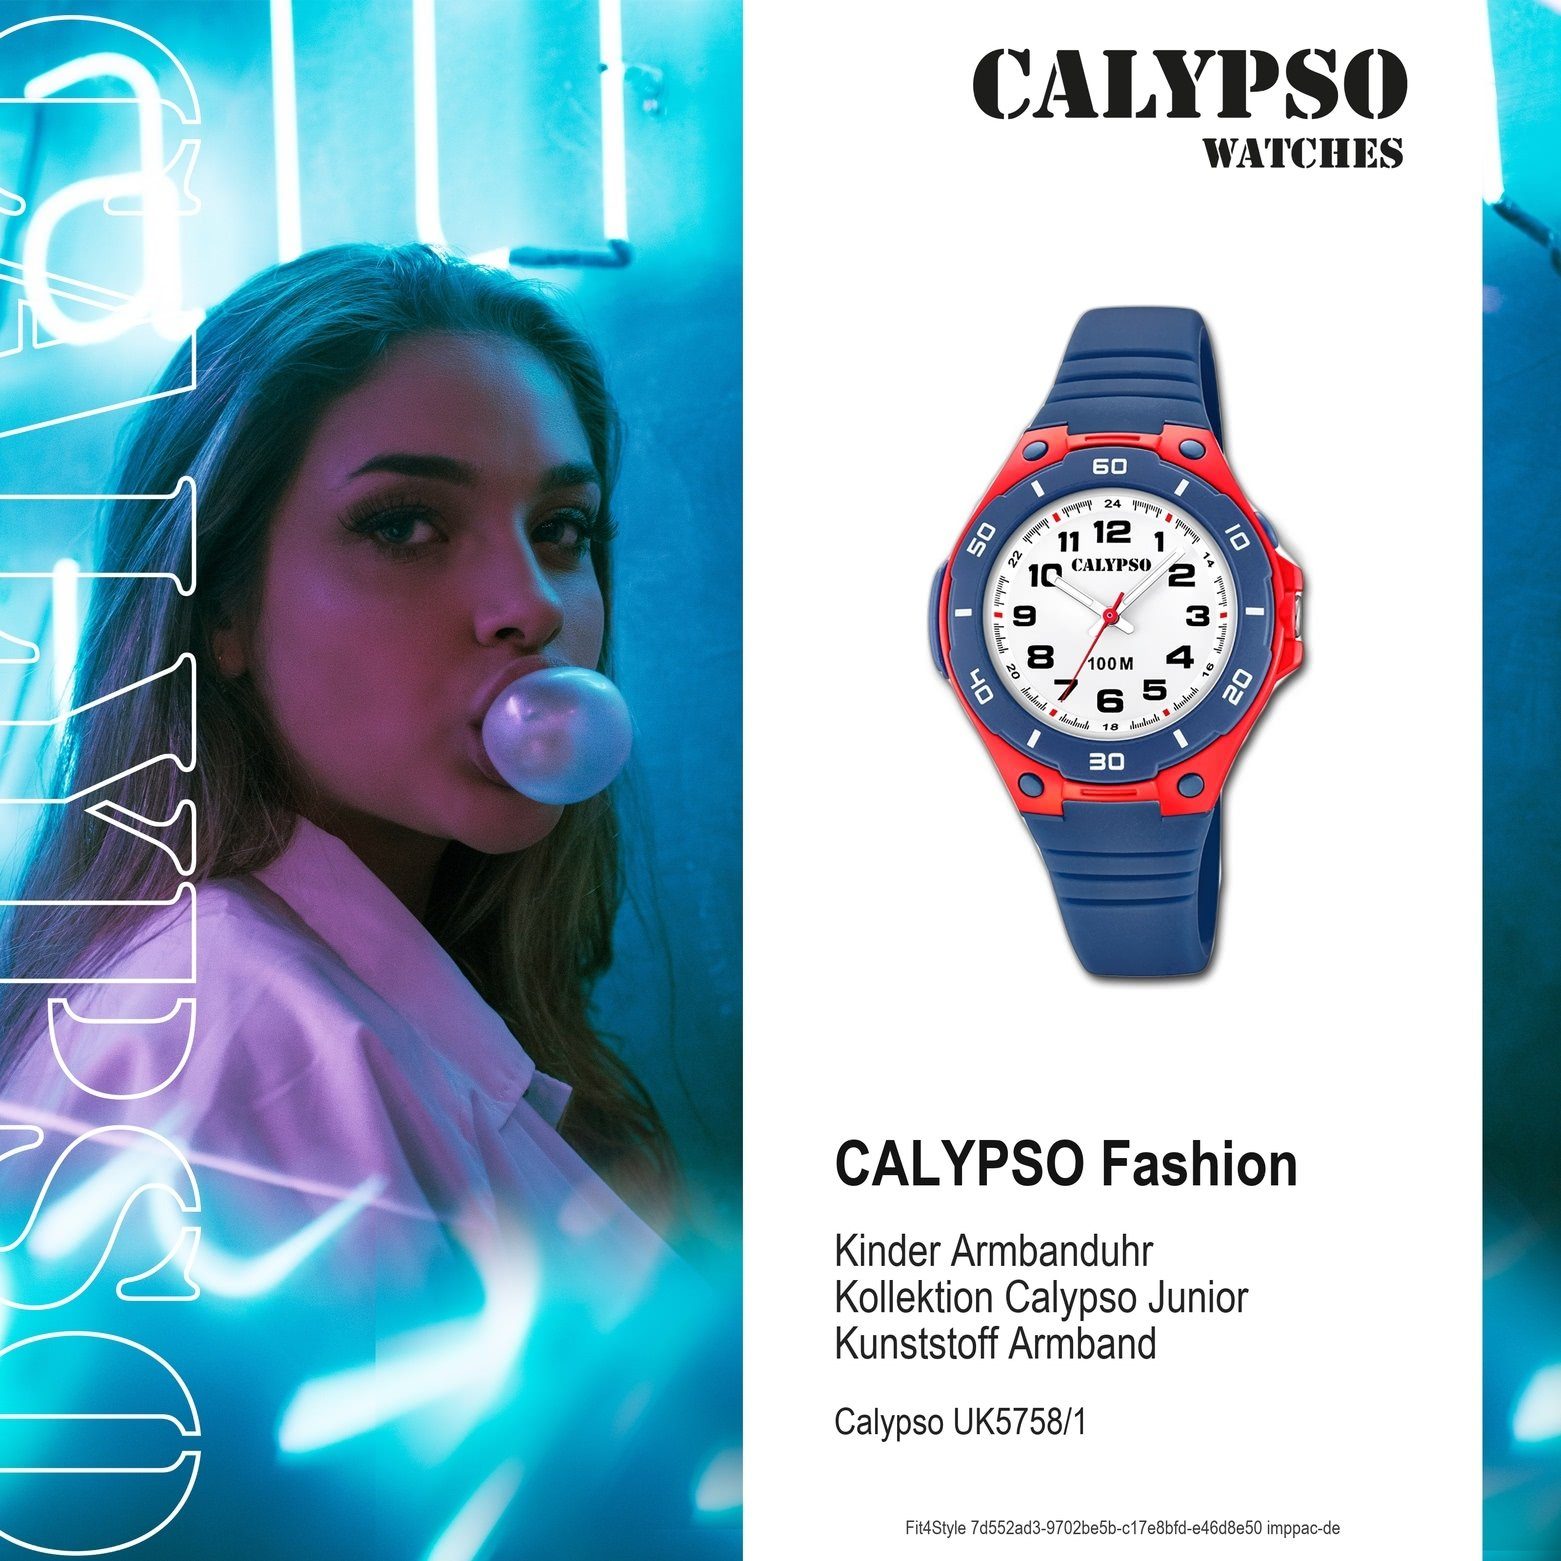 CALYPSO WATCHES PU, Calypso Kunststoff K5758/1 Armbanduhr PUarmband Fashion Quarzuhr Kunststoff, blau, Kinder Uhr rund, Kinder